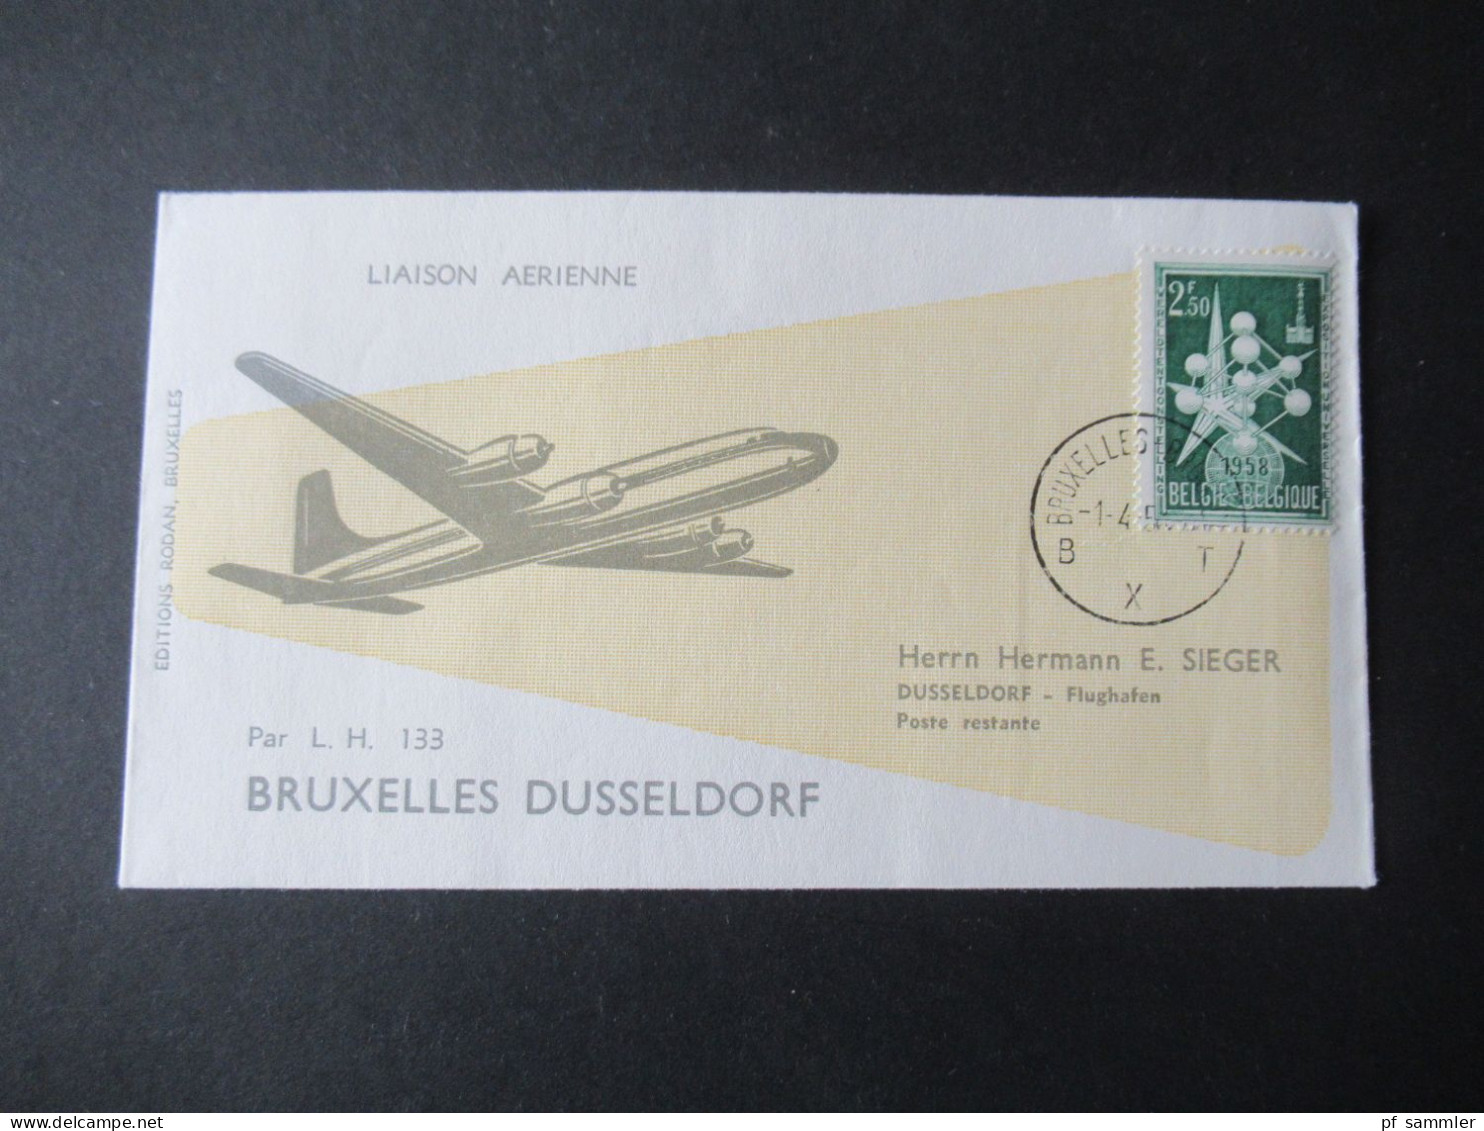 Belgien 1958 Erstflug / First Flight Deutsche Lufthansa LH 133 Bruxelles - Düsseldorf / Hermann E. Sieger Beleg - Briefe U. Dokumente